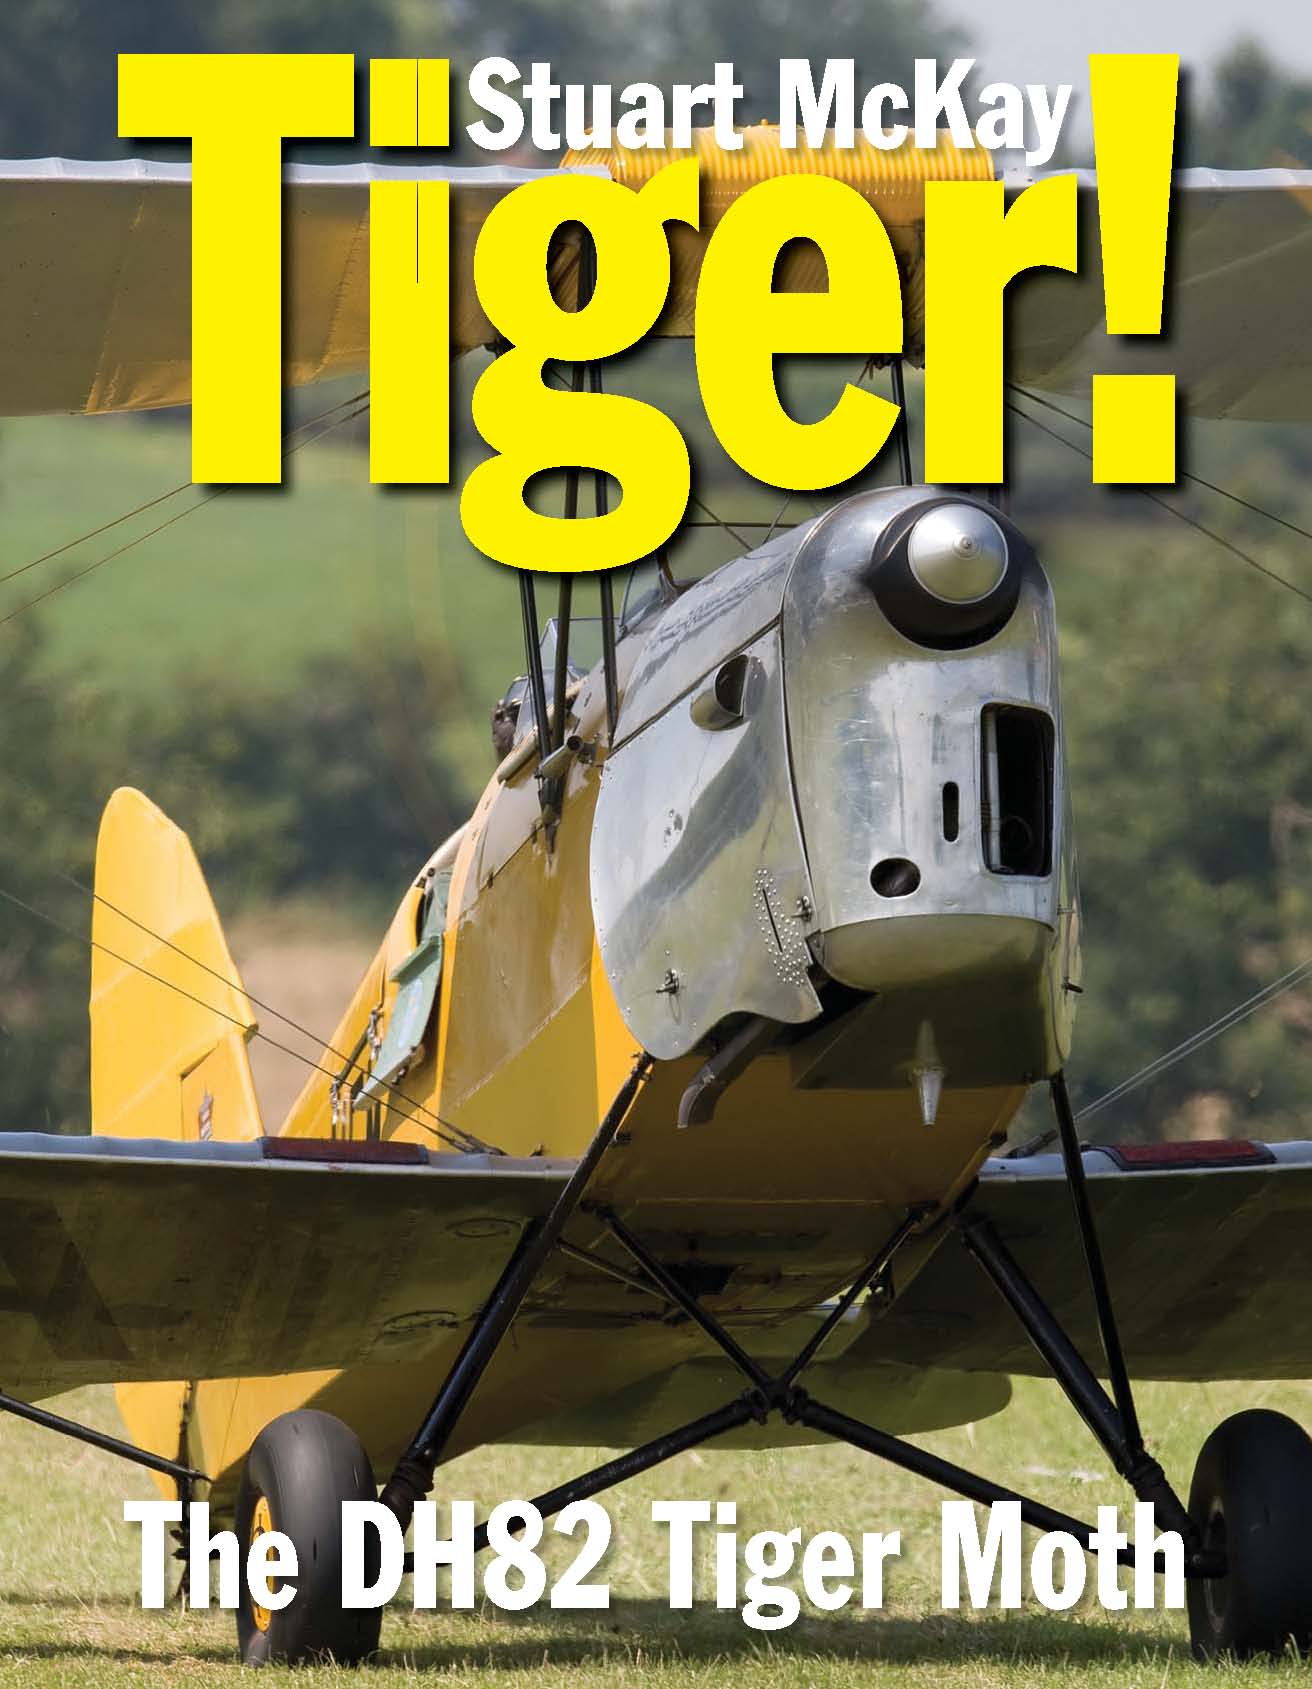 Tigermoth Aircraft